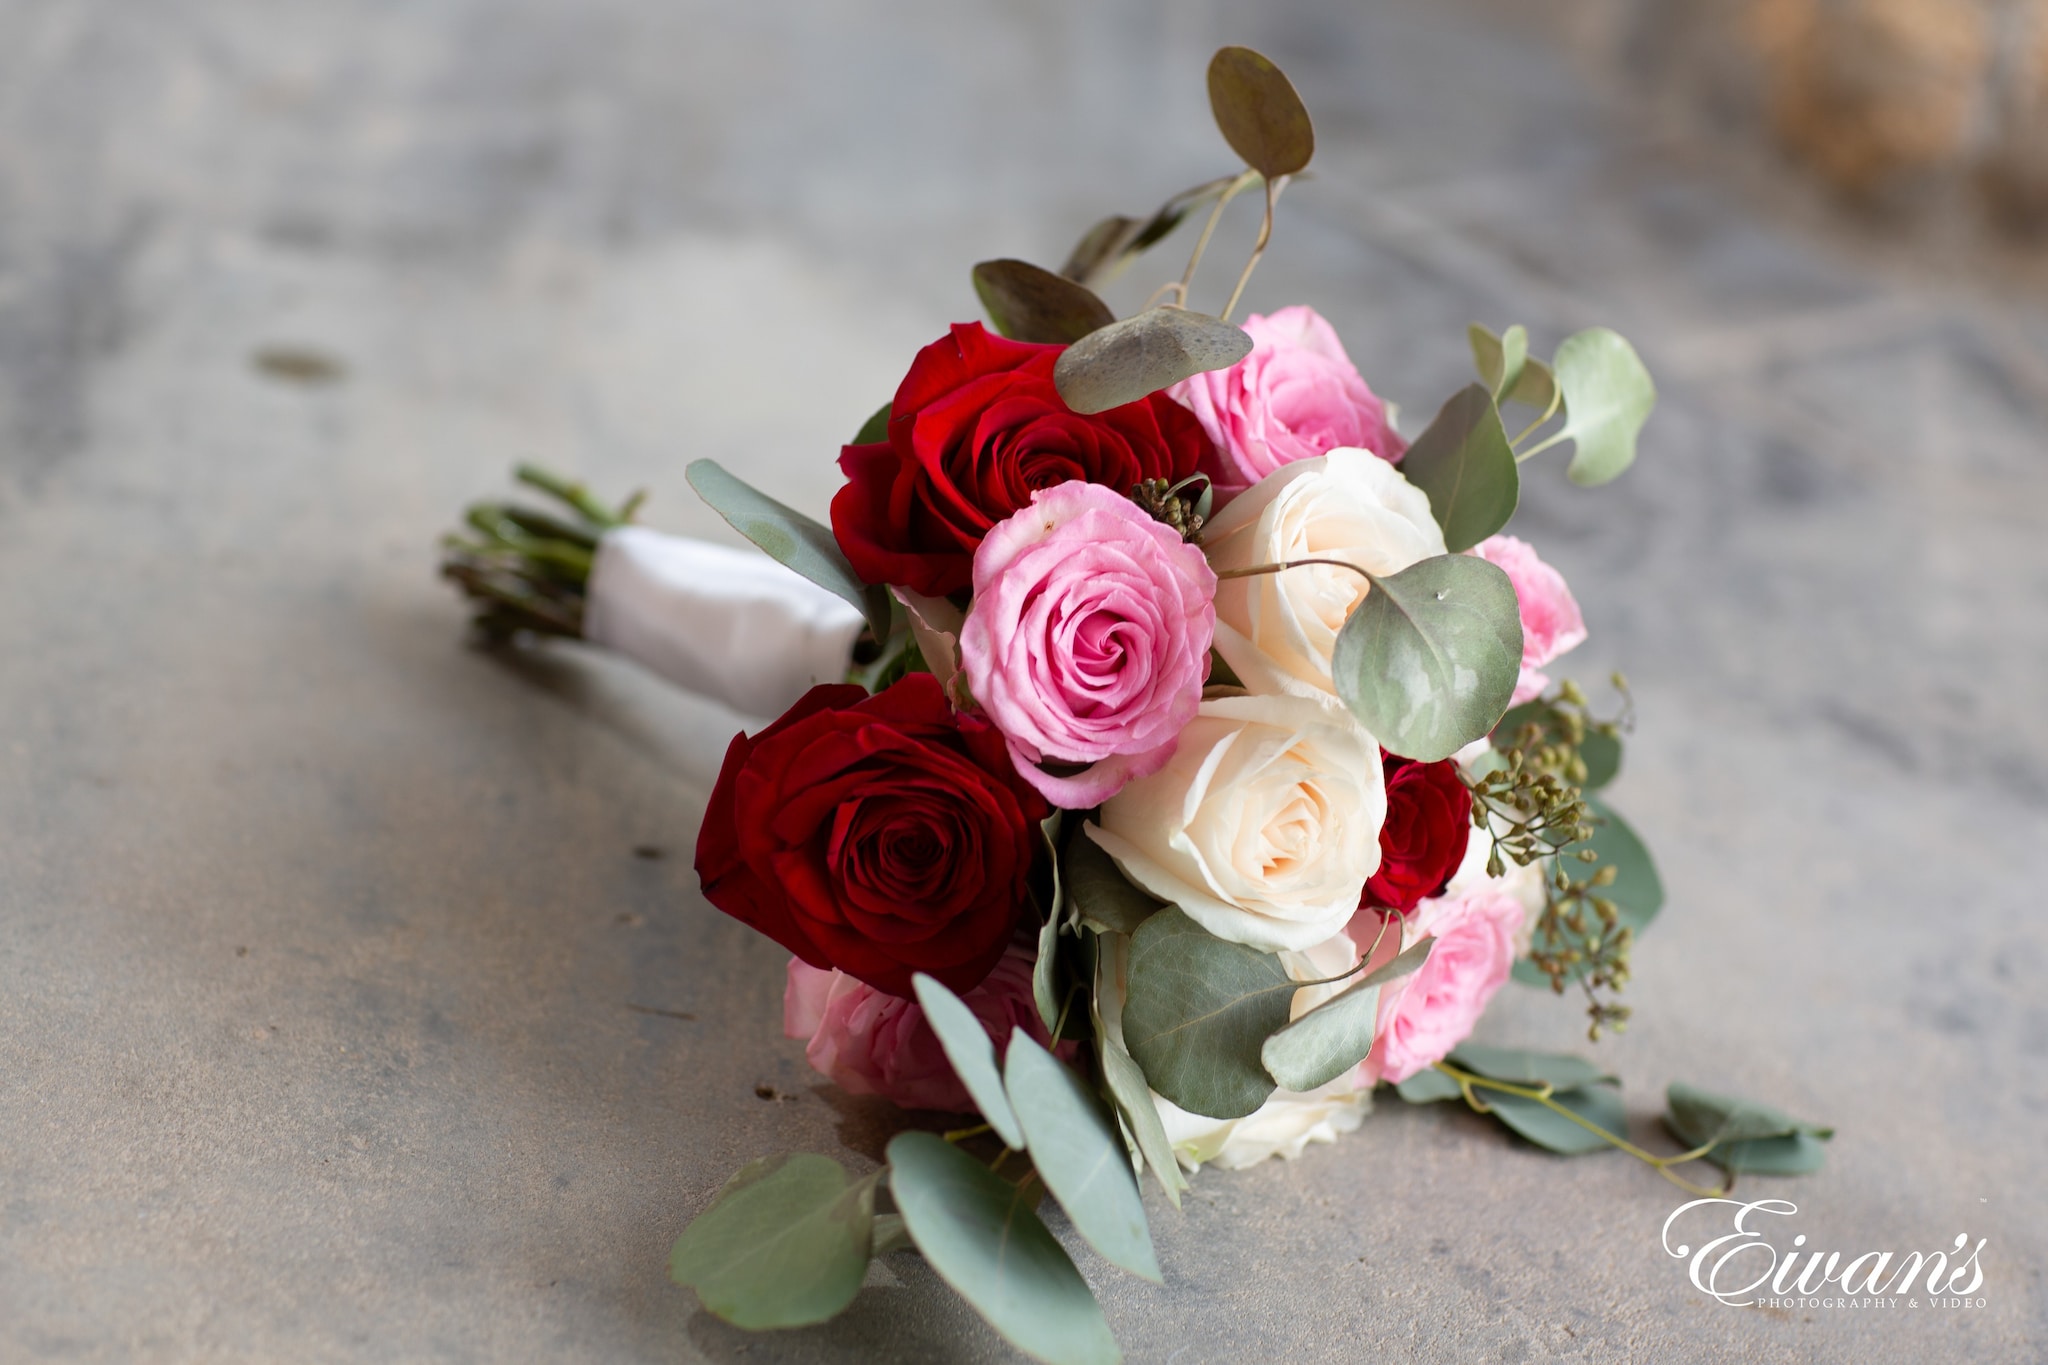 Ivory Satin Roses Bright Diamond Flowers Bride Bridesmaid Bouquet Wedding Gift 